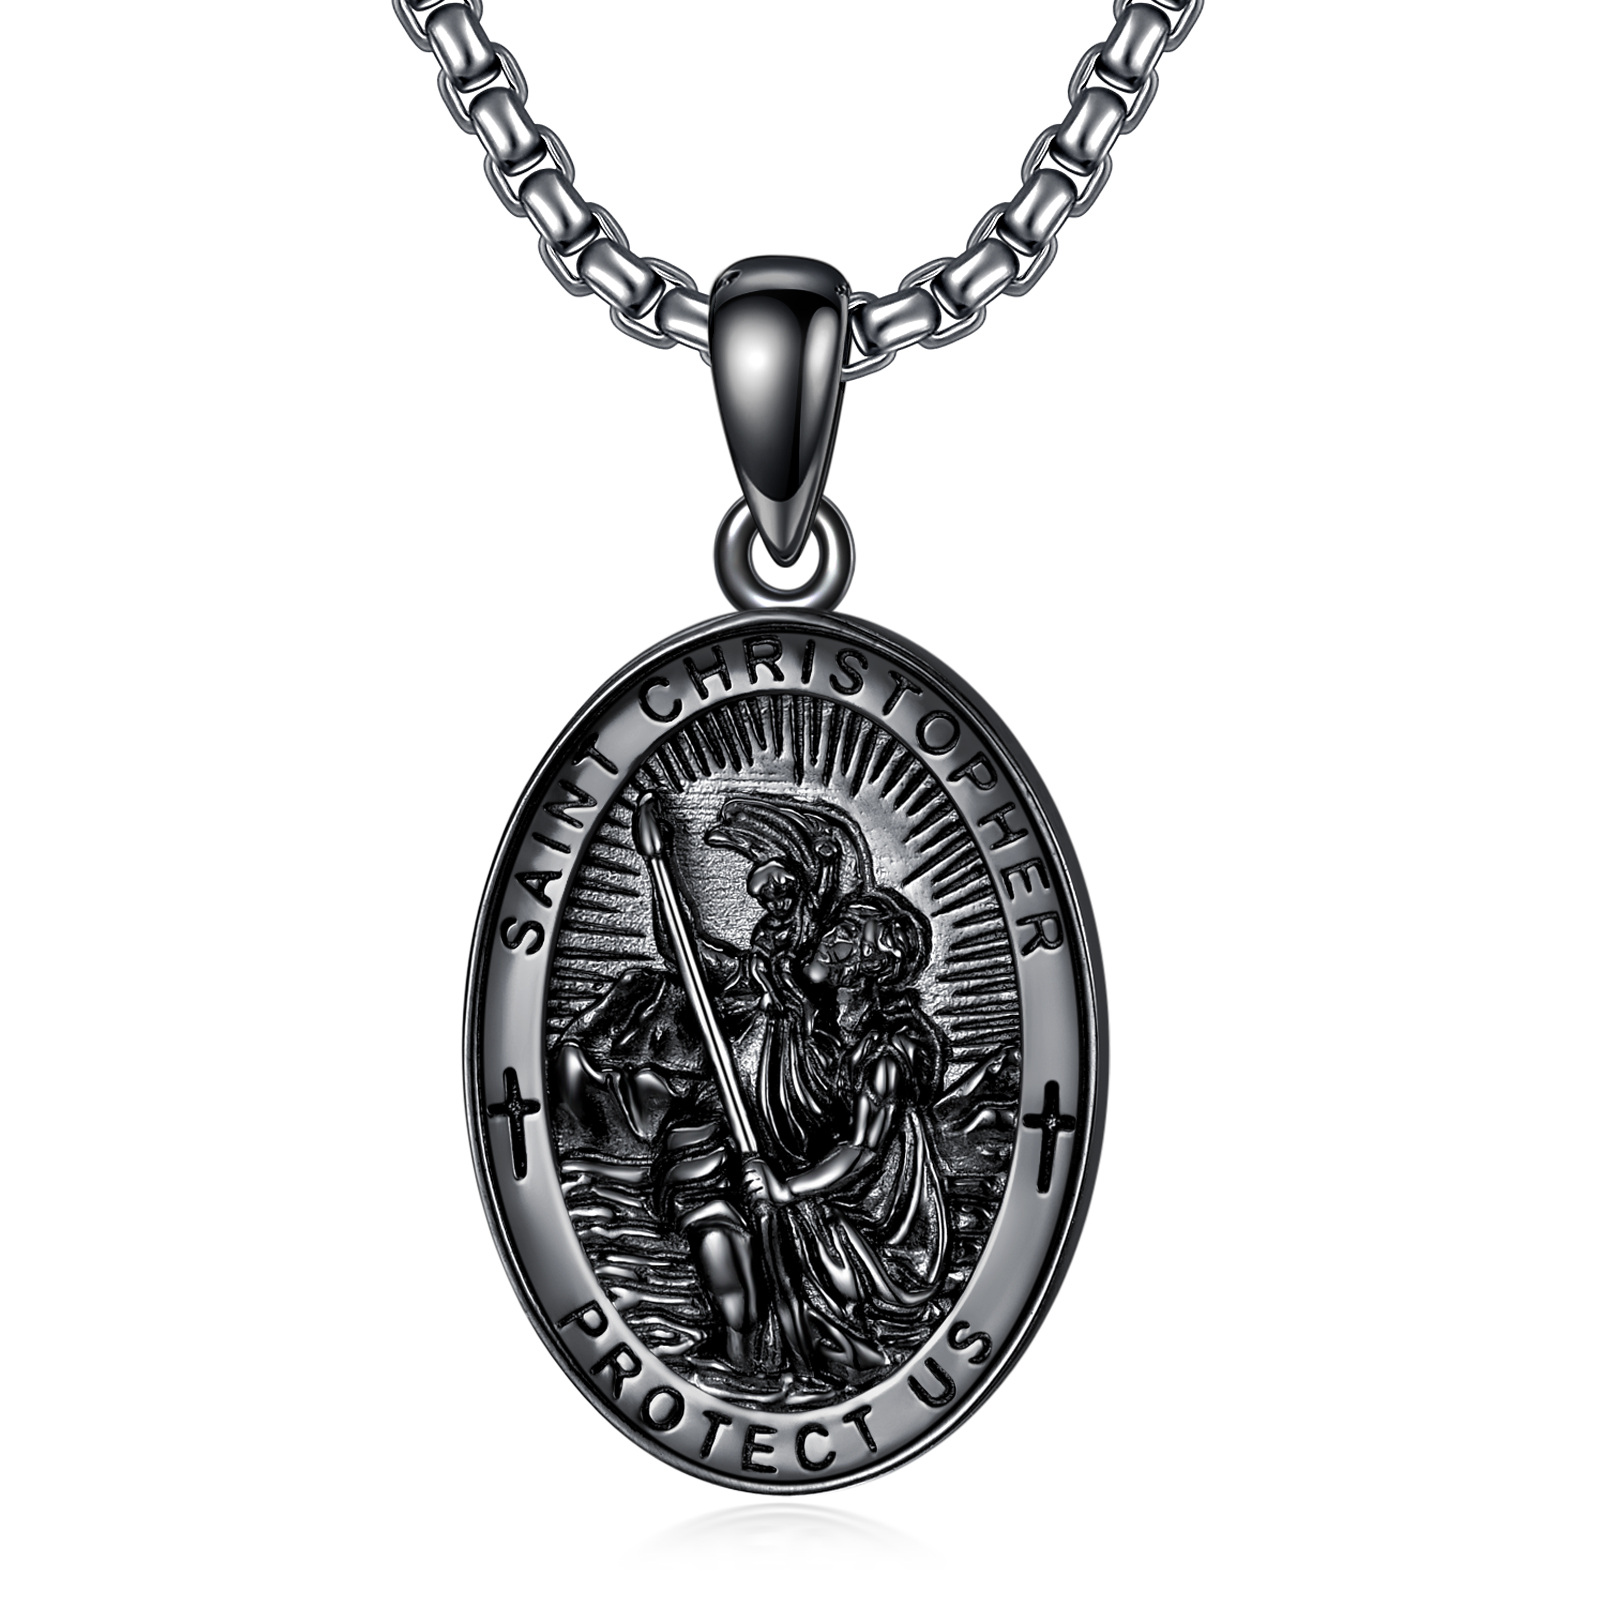 1913 Men's Oxidized Stainless Steel Saint Christopher Pendant Necklace